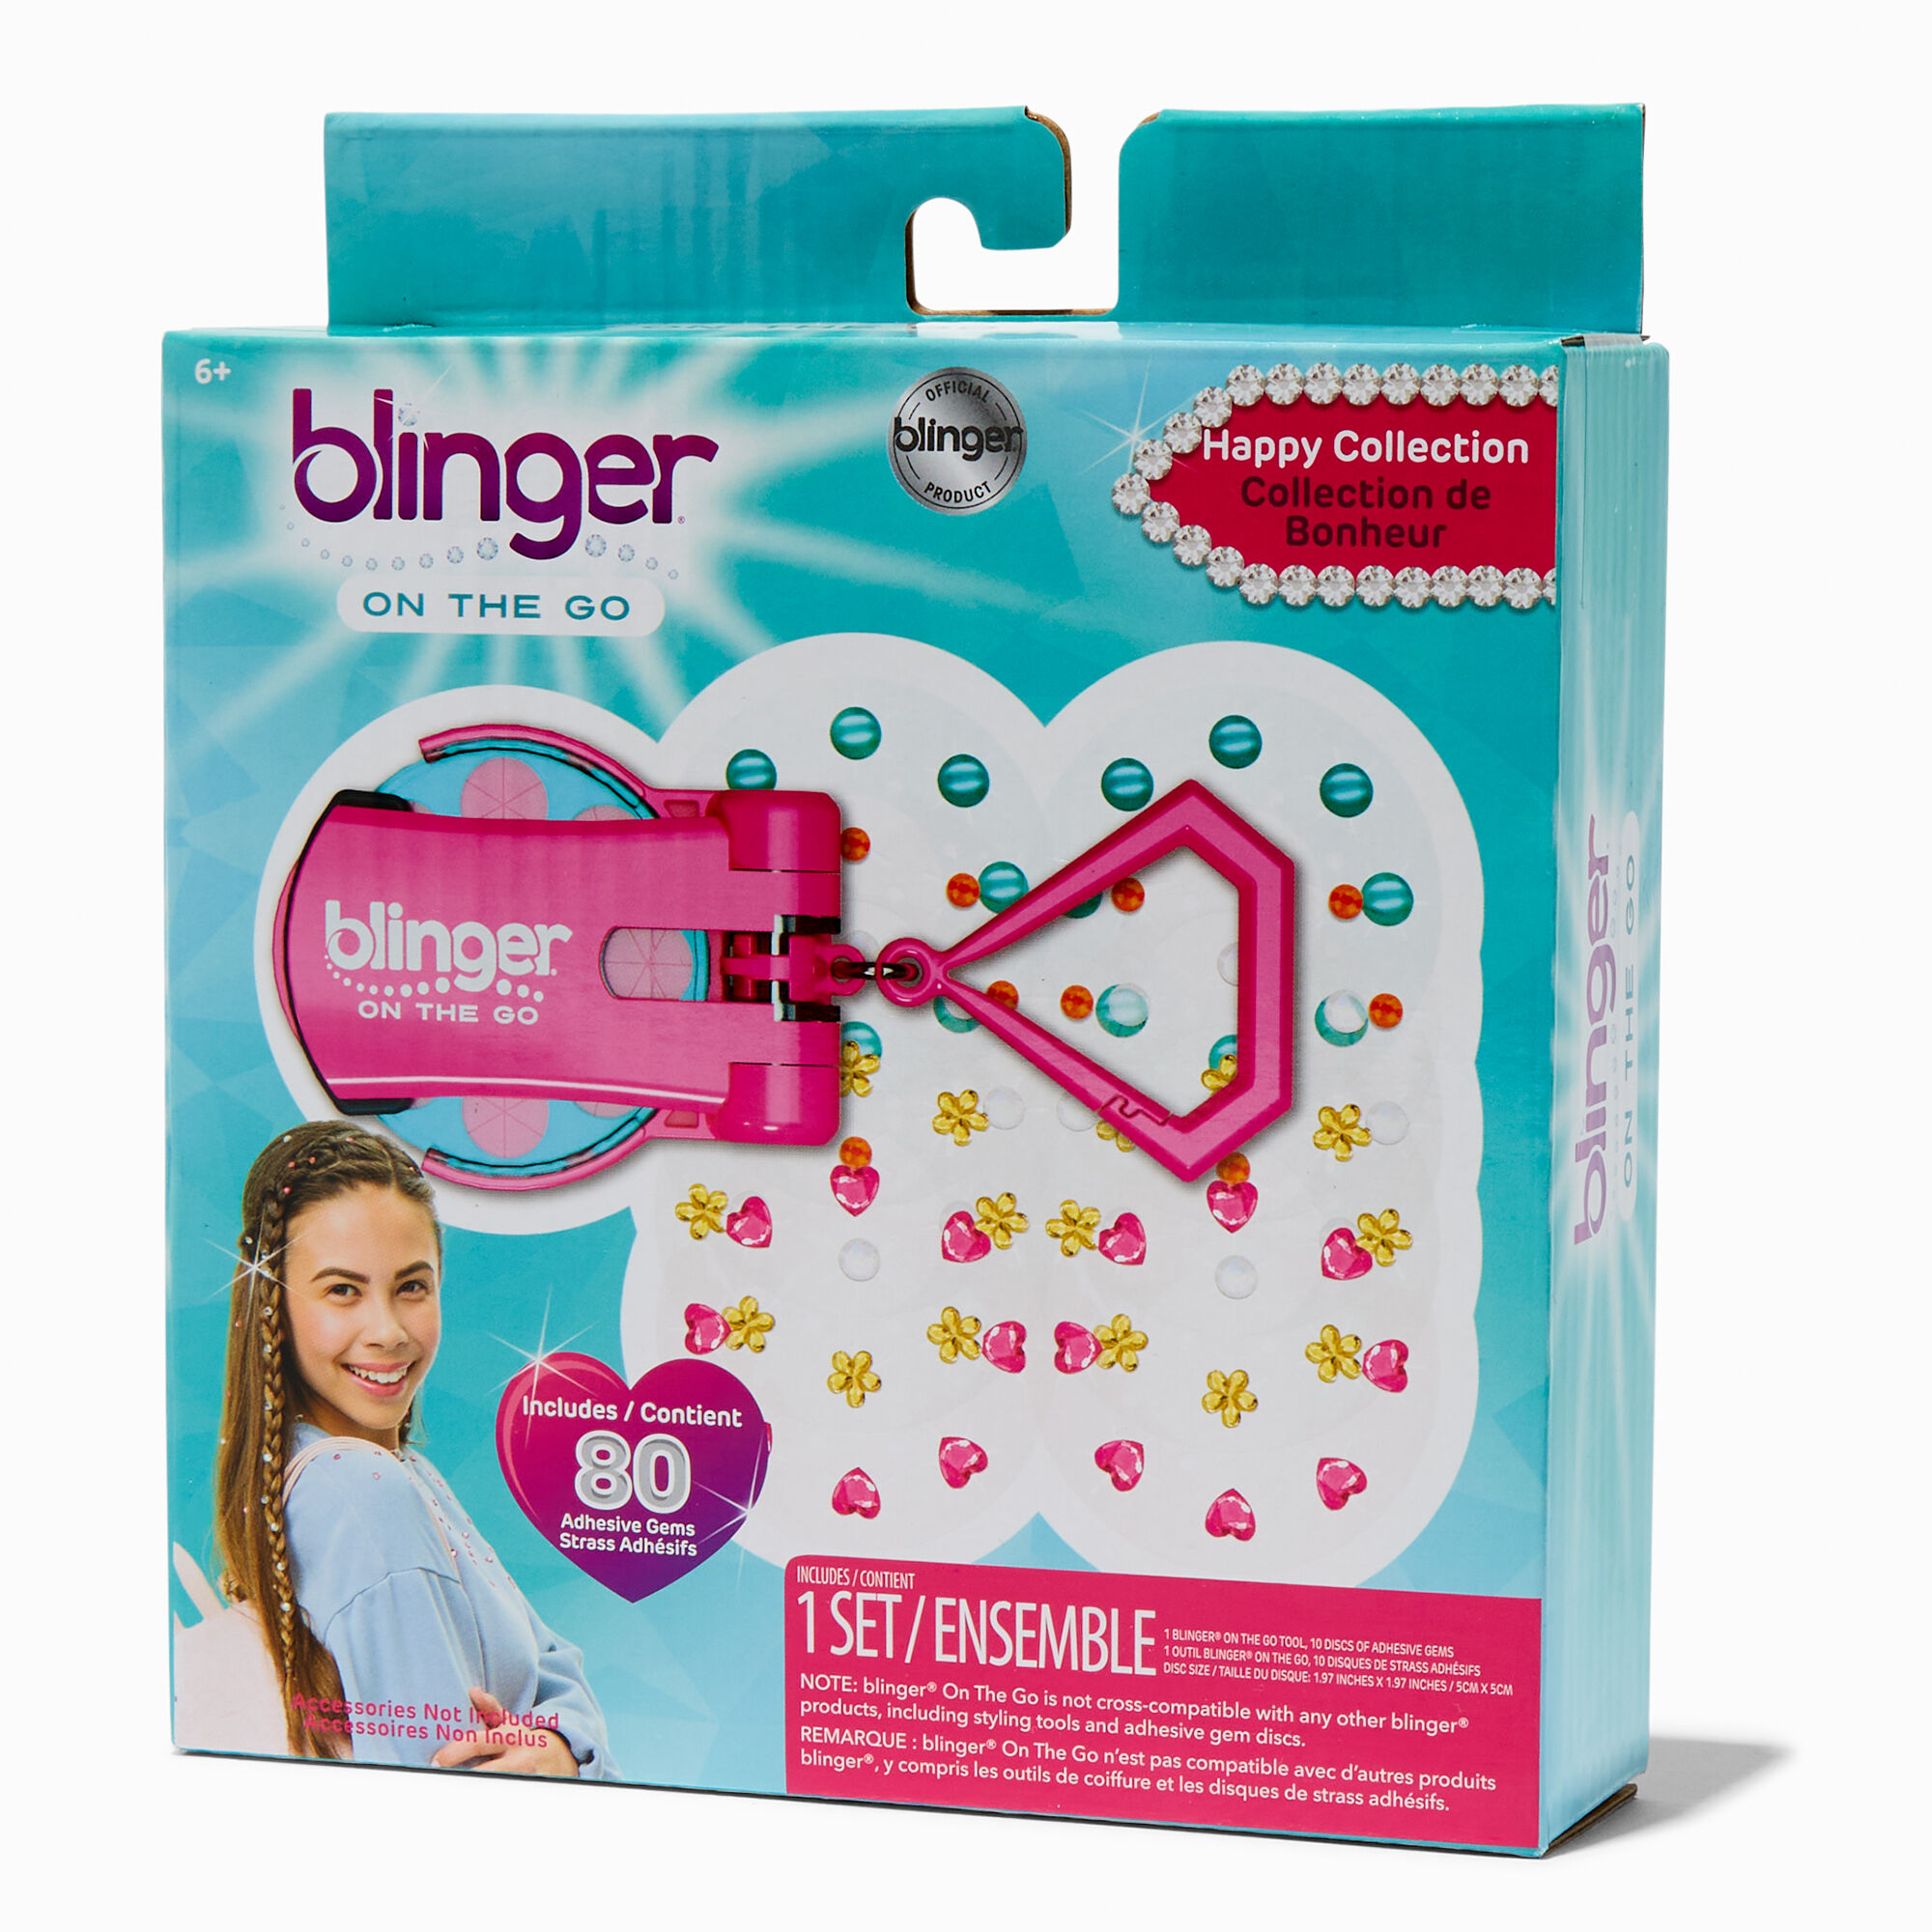 View Claires Blinger On The Go Adhesive Gem Starter Kit information